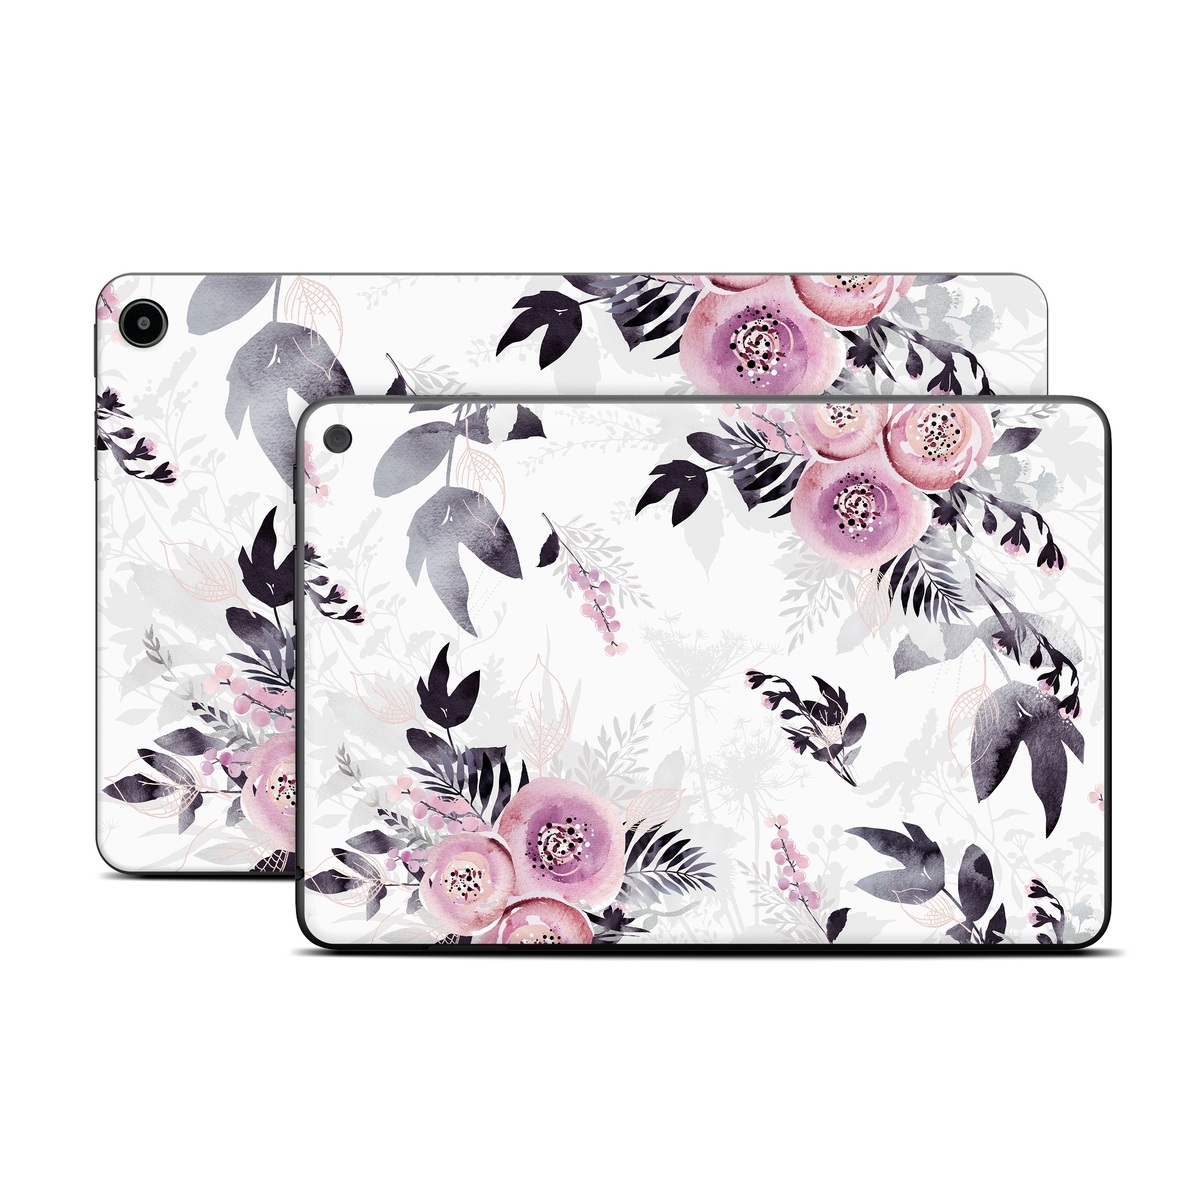 Amazon Fire Tablet Series Skin Skin design of Pink, Pattern, Design, Floral design, Textile, Plant, Flower, Magenta, Petal, Wallpaper, with white, purple, pink, black, gray colors